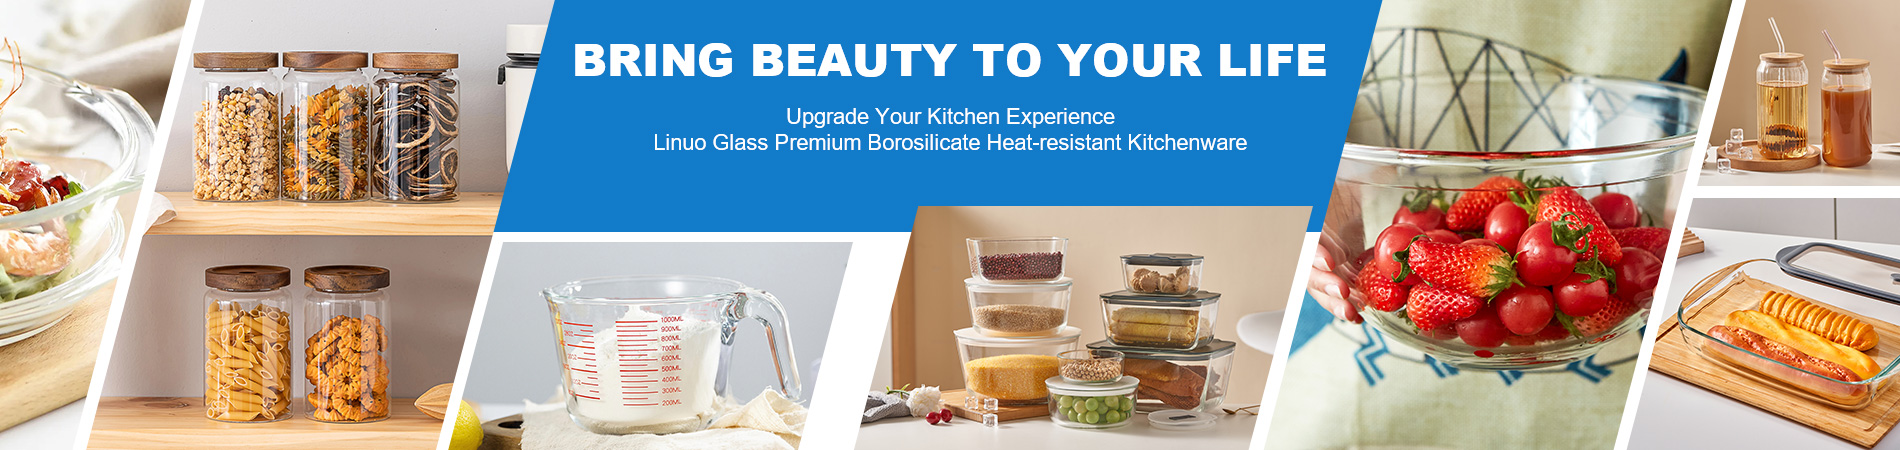 Linuo Glass Premium Borosilicate Heat-resistant Kitchenware